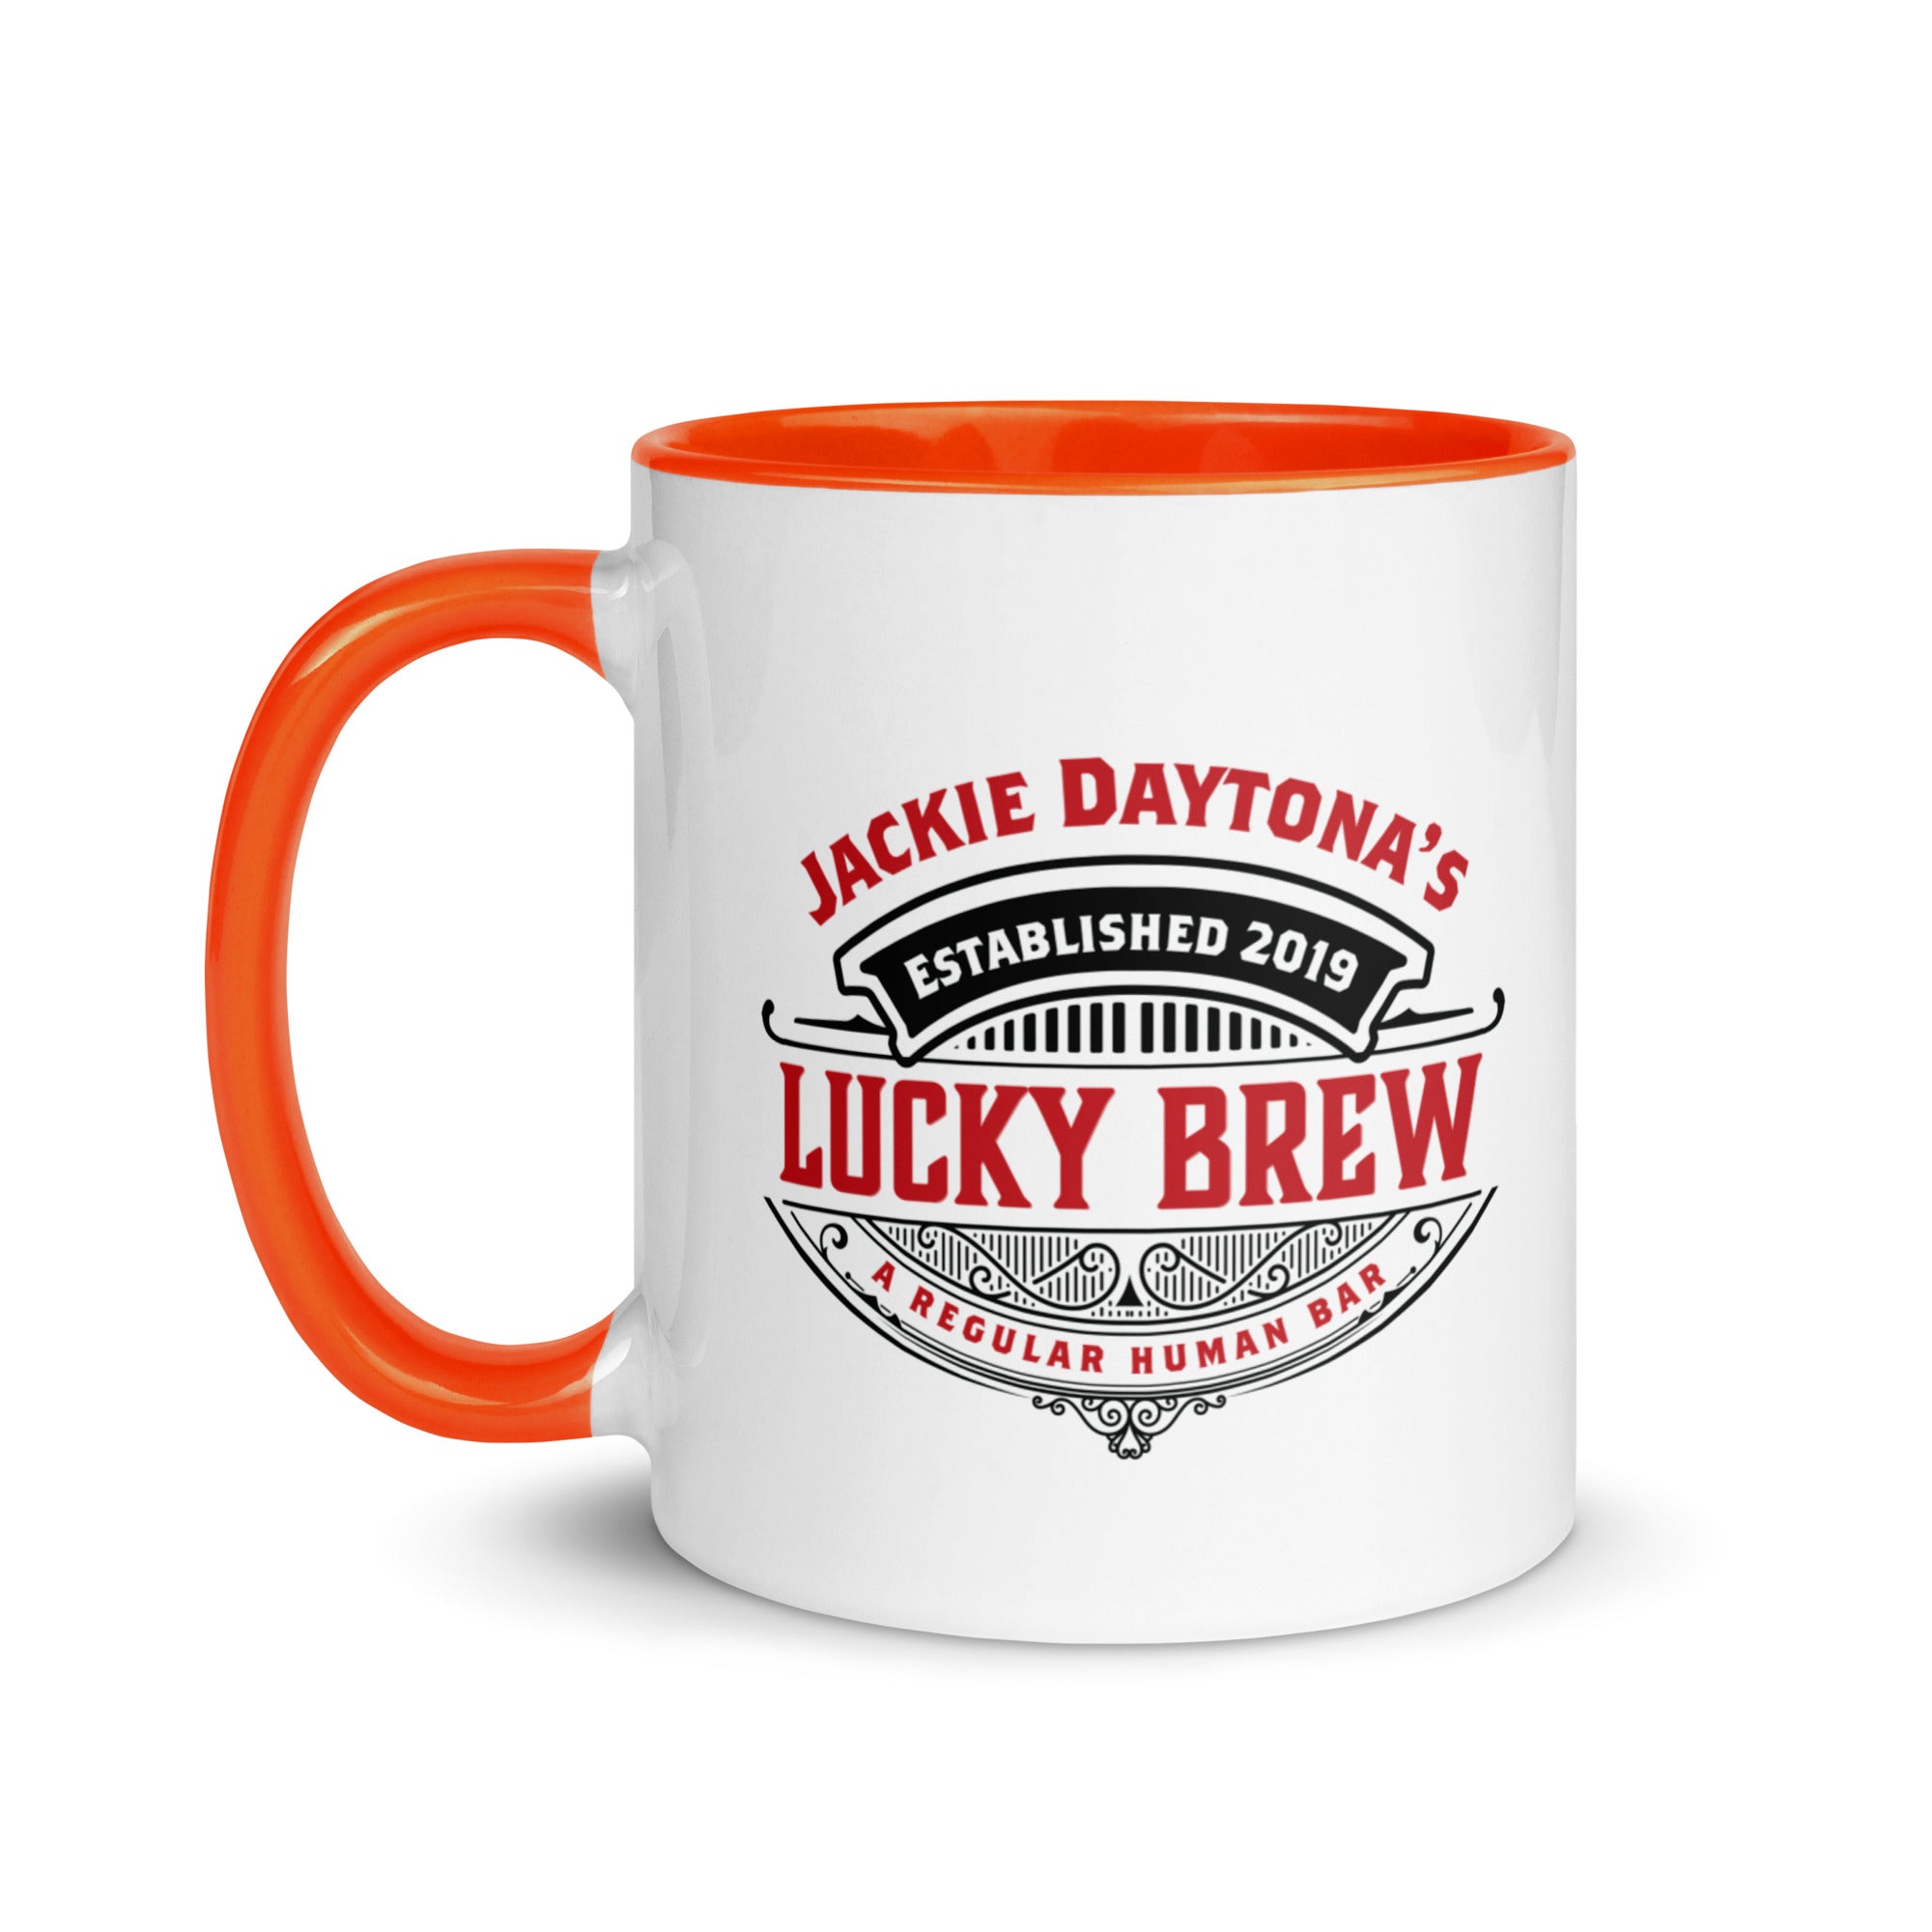 Jackie Daytona's Bar Mug with Color Inside